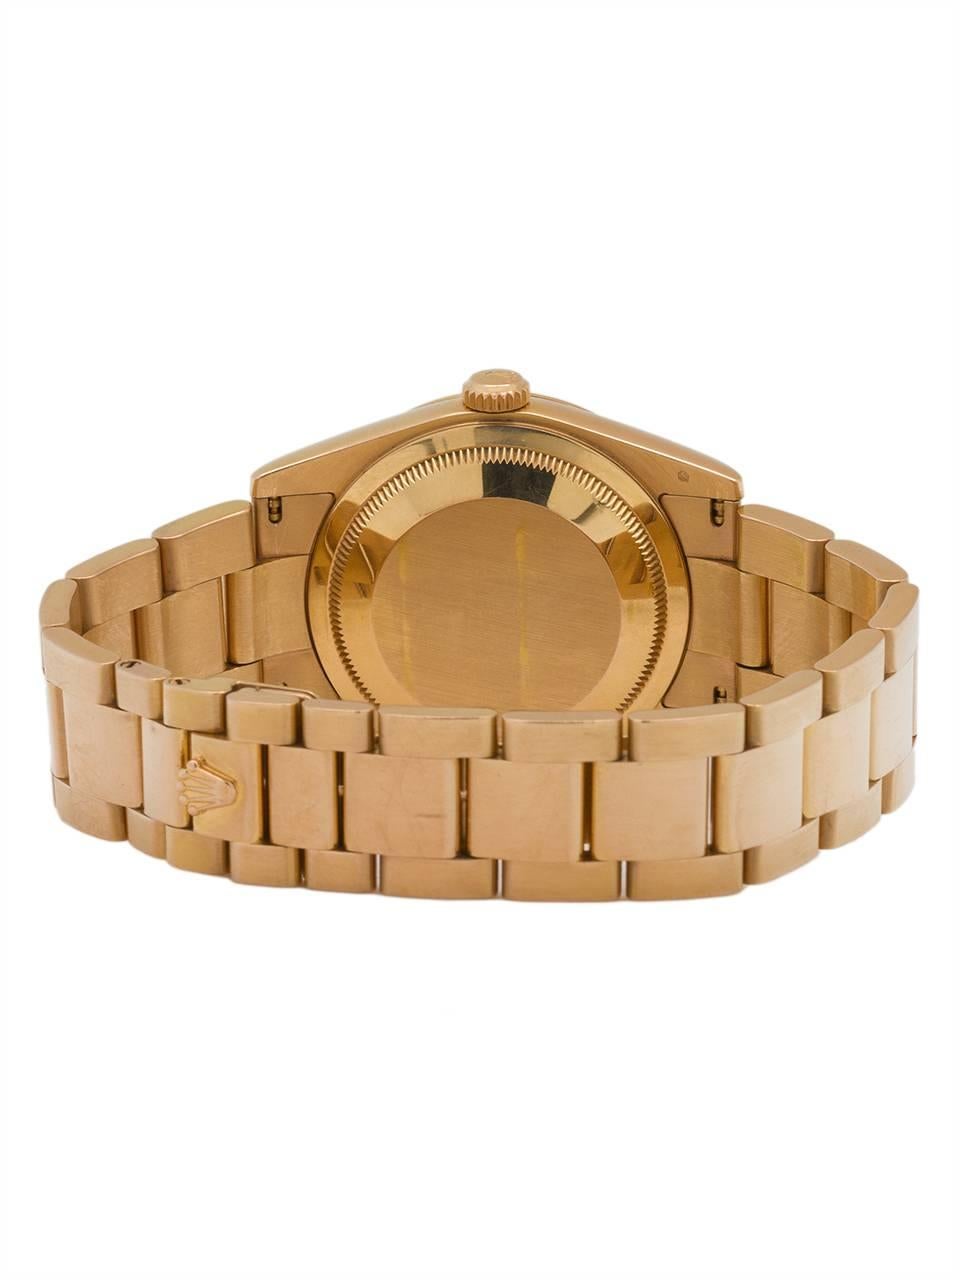 Men's Rolex Yellow Gold Oyster President Roman Rose Dial Wristwatch, circa 2000